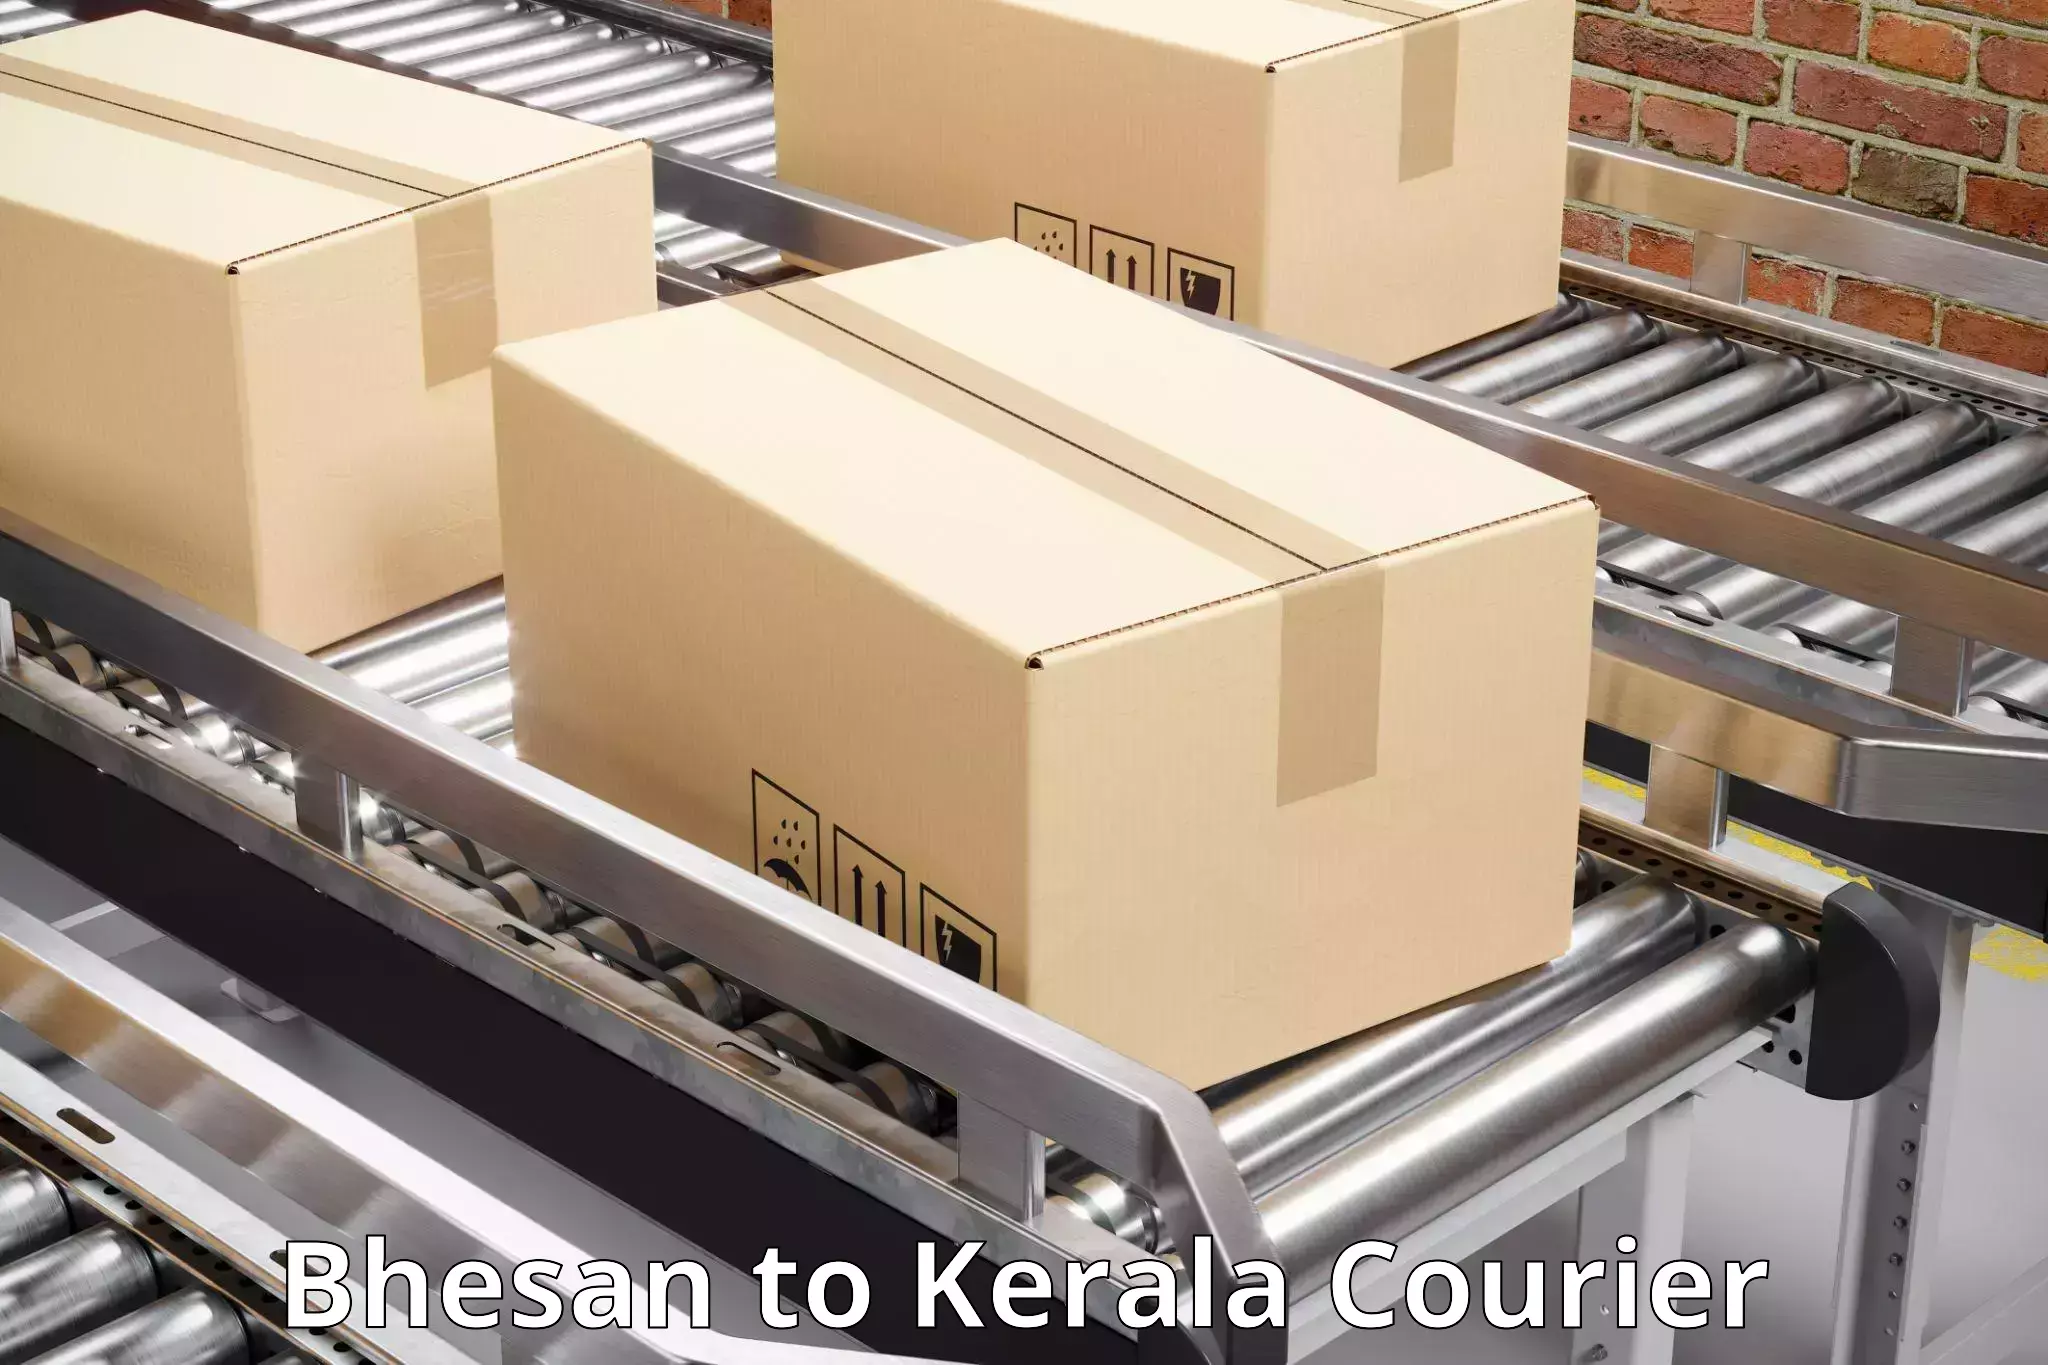 Express delivery capabilities Bhesan to Kattappana